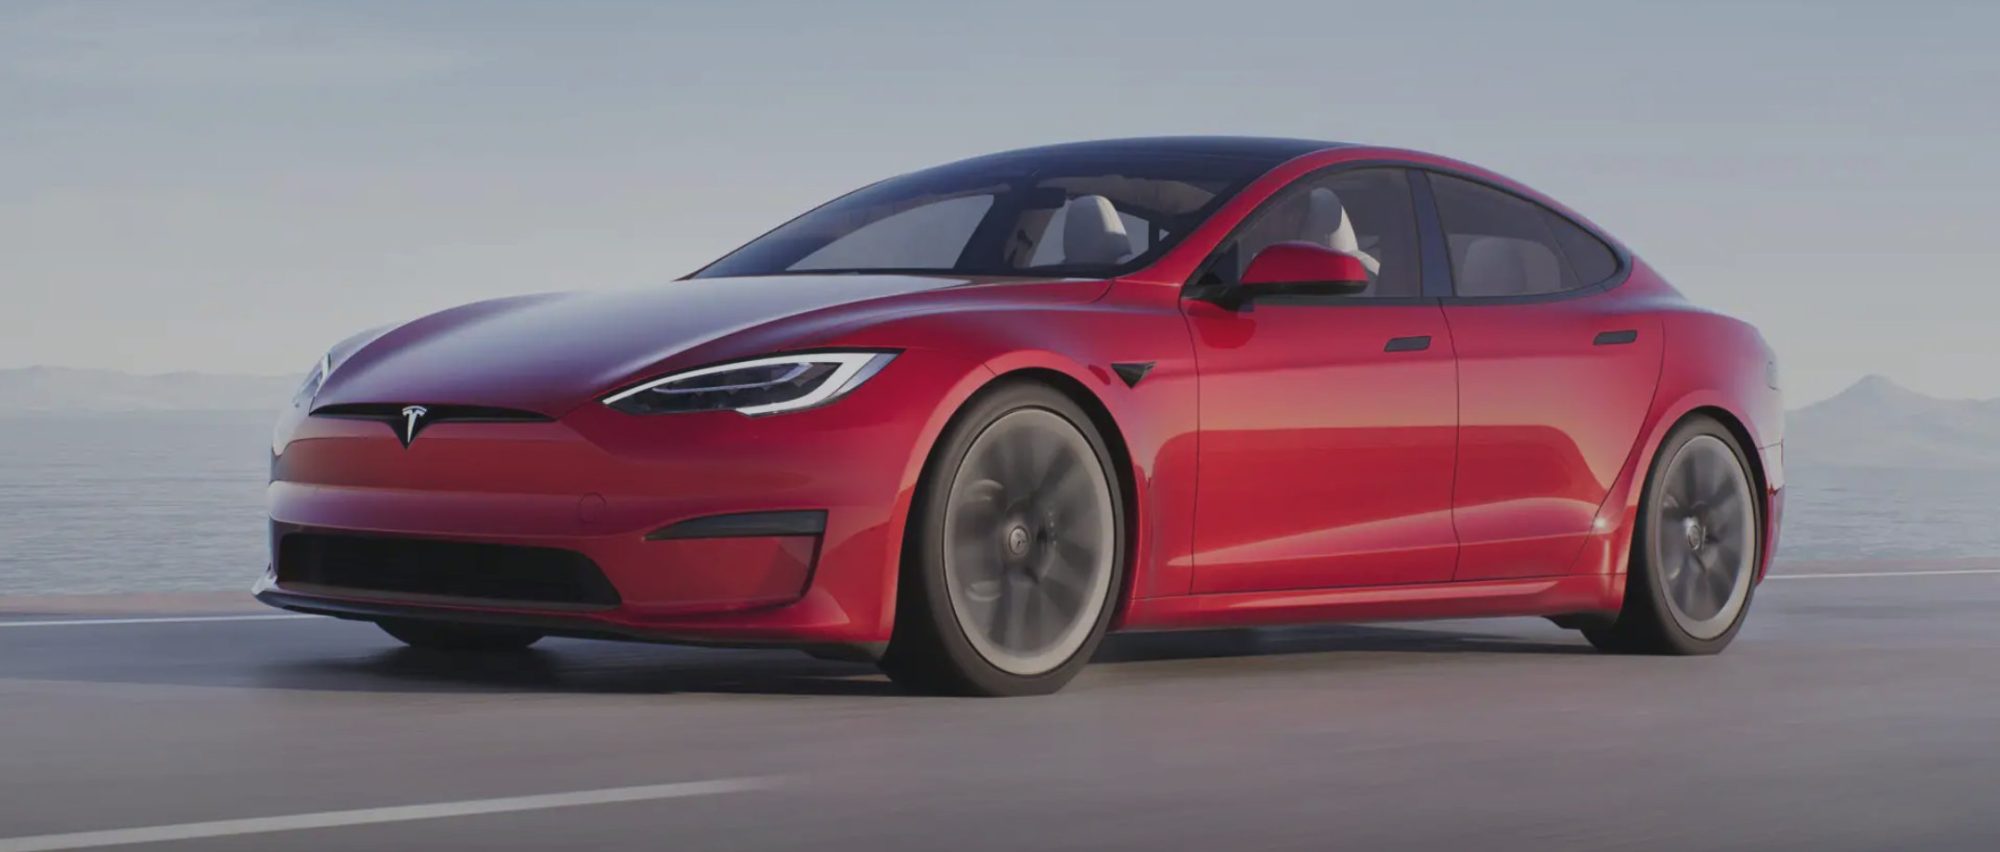 Tesla is working to release huge full self-driving beta update